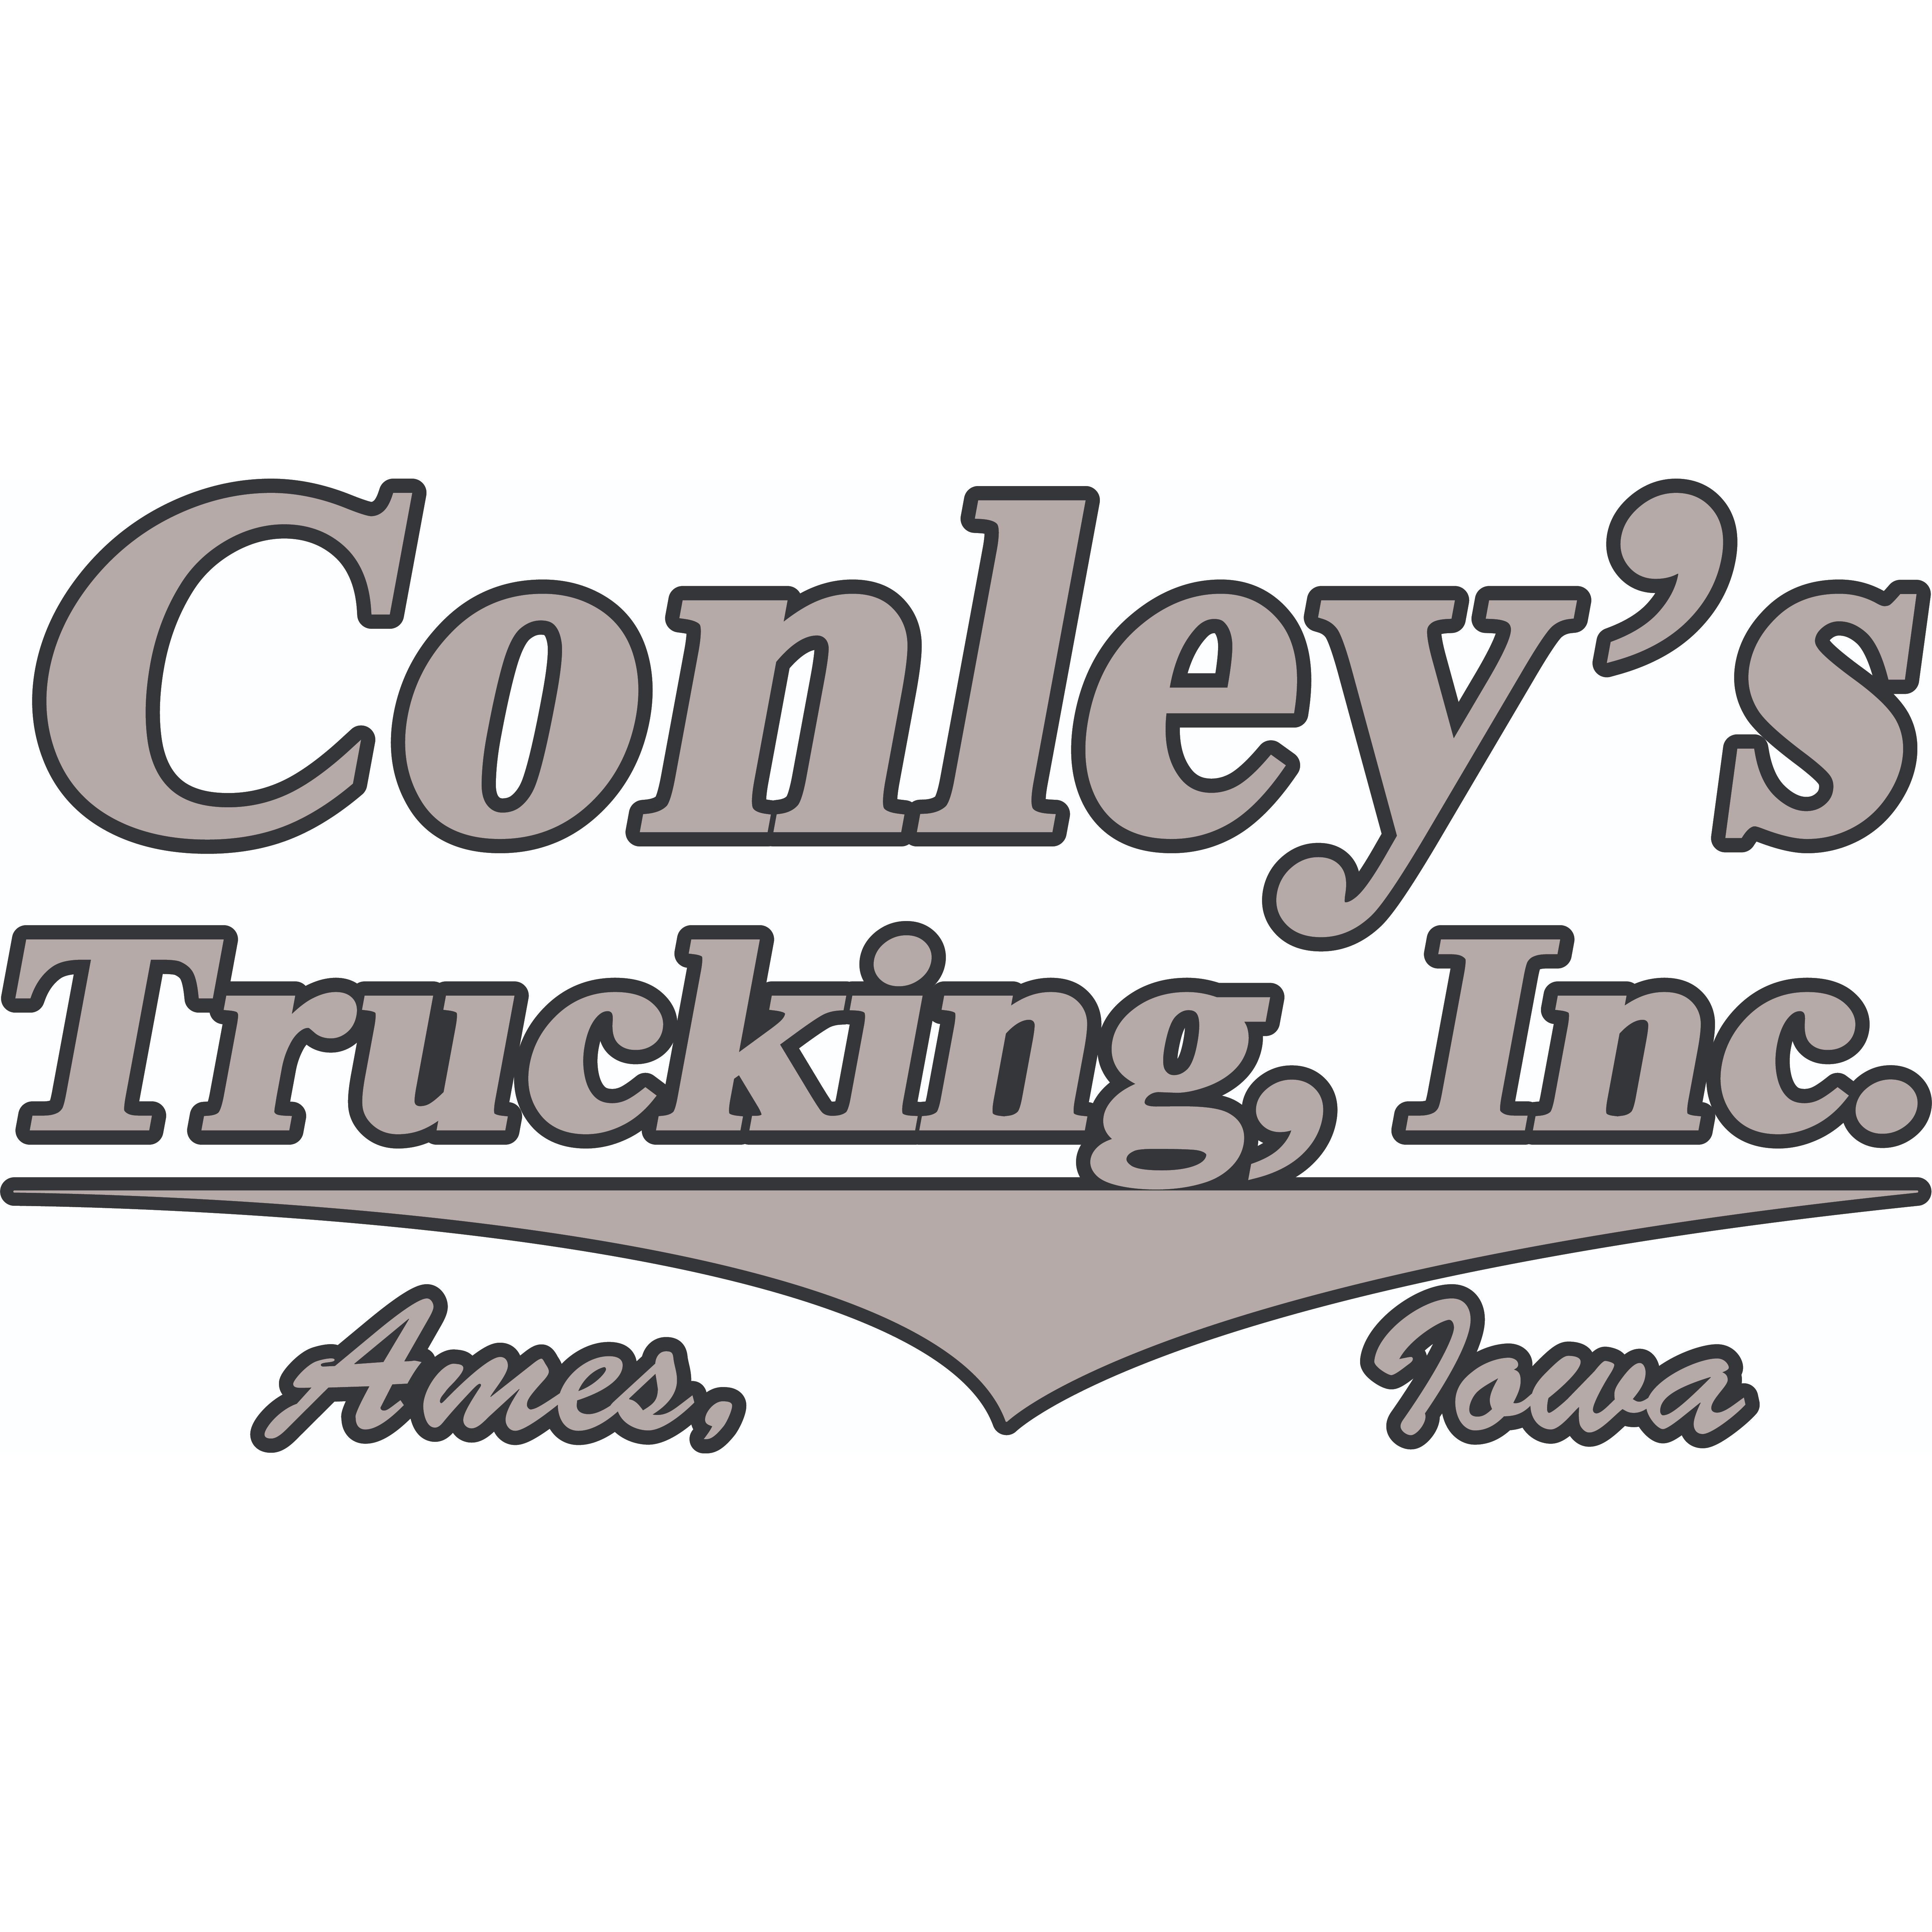 Conley's Trucking - Ames, IA 50010 - (515)233-2317 | ShowMeLocal.com